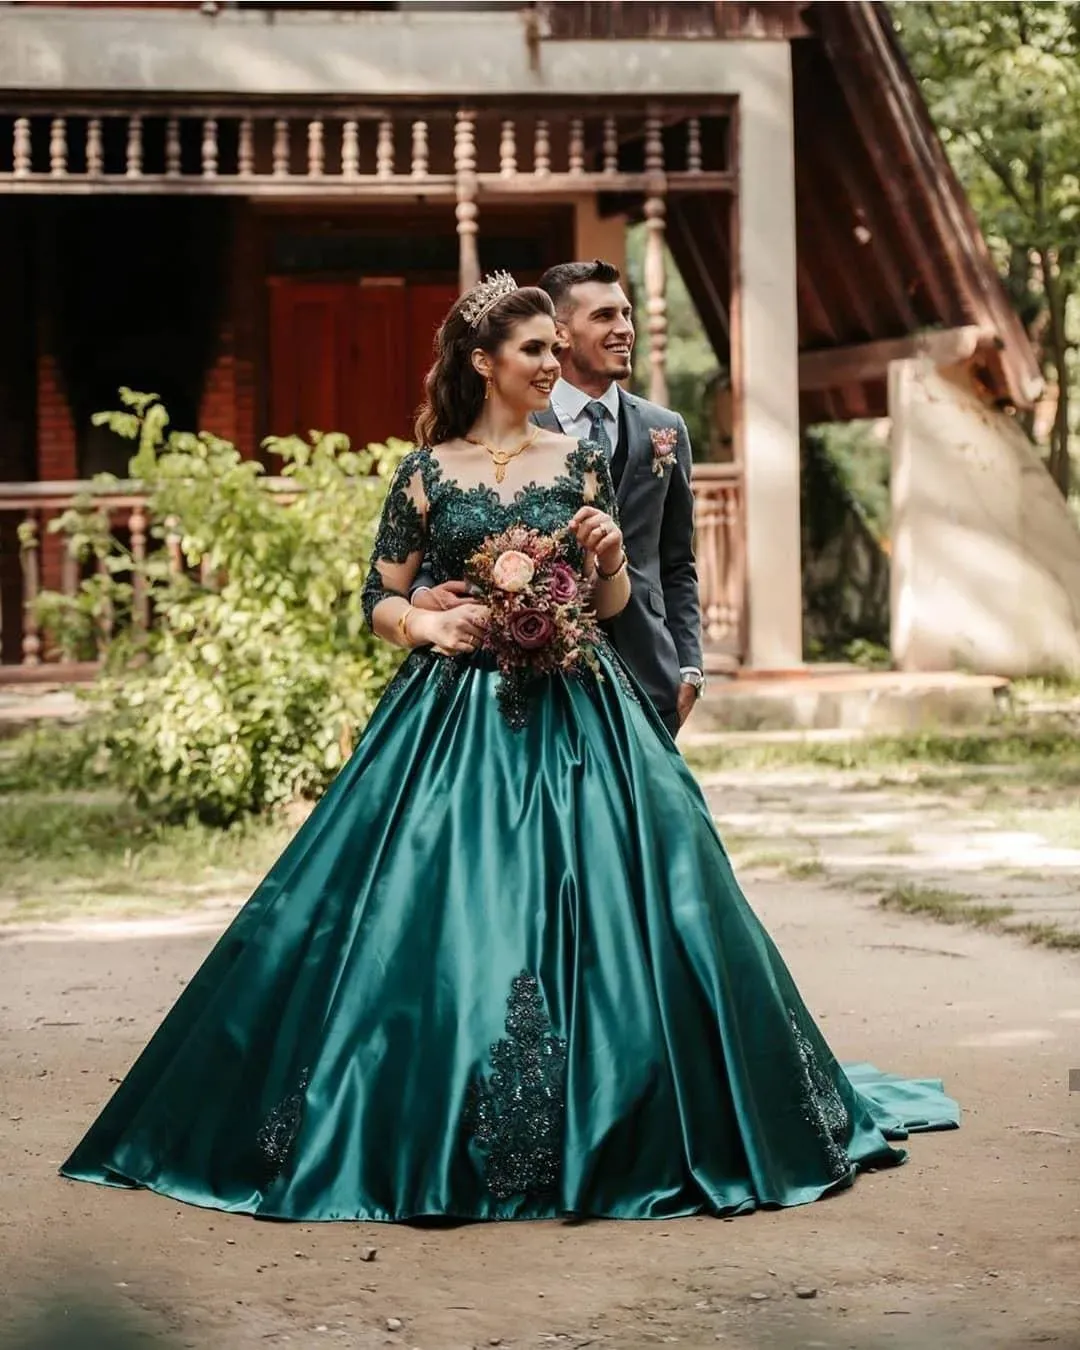 Dresses Green Satin Short Sleeve Ball Gown Wedding Dresses Plus Size Bridal Gowns abiti da sposa 2020 elegant Wedding Dress Luxury Arabic